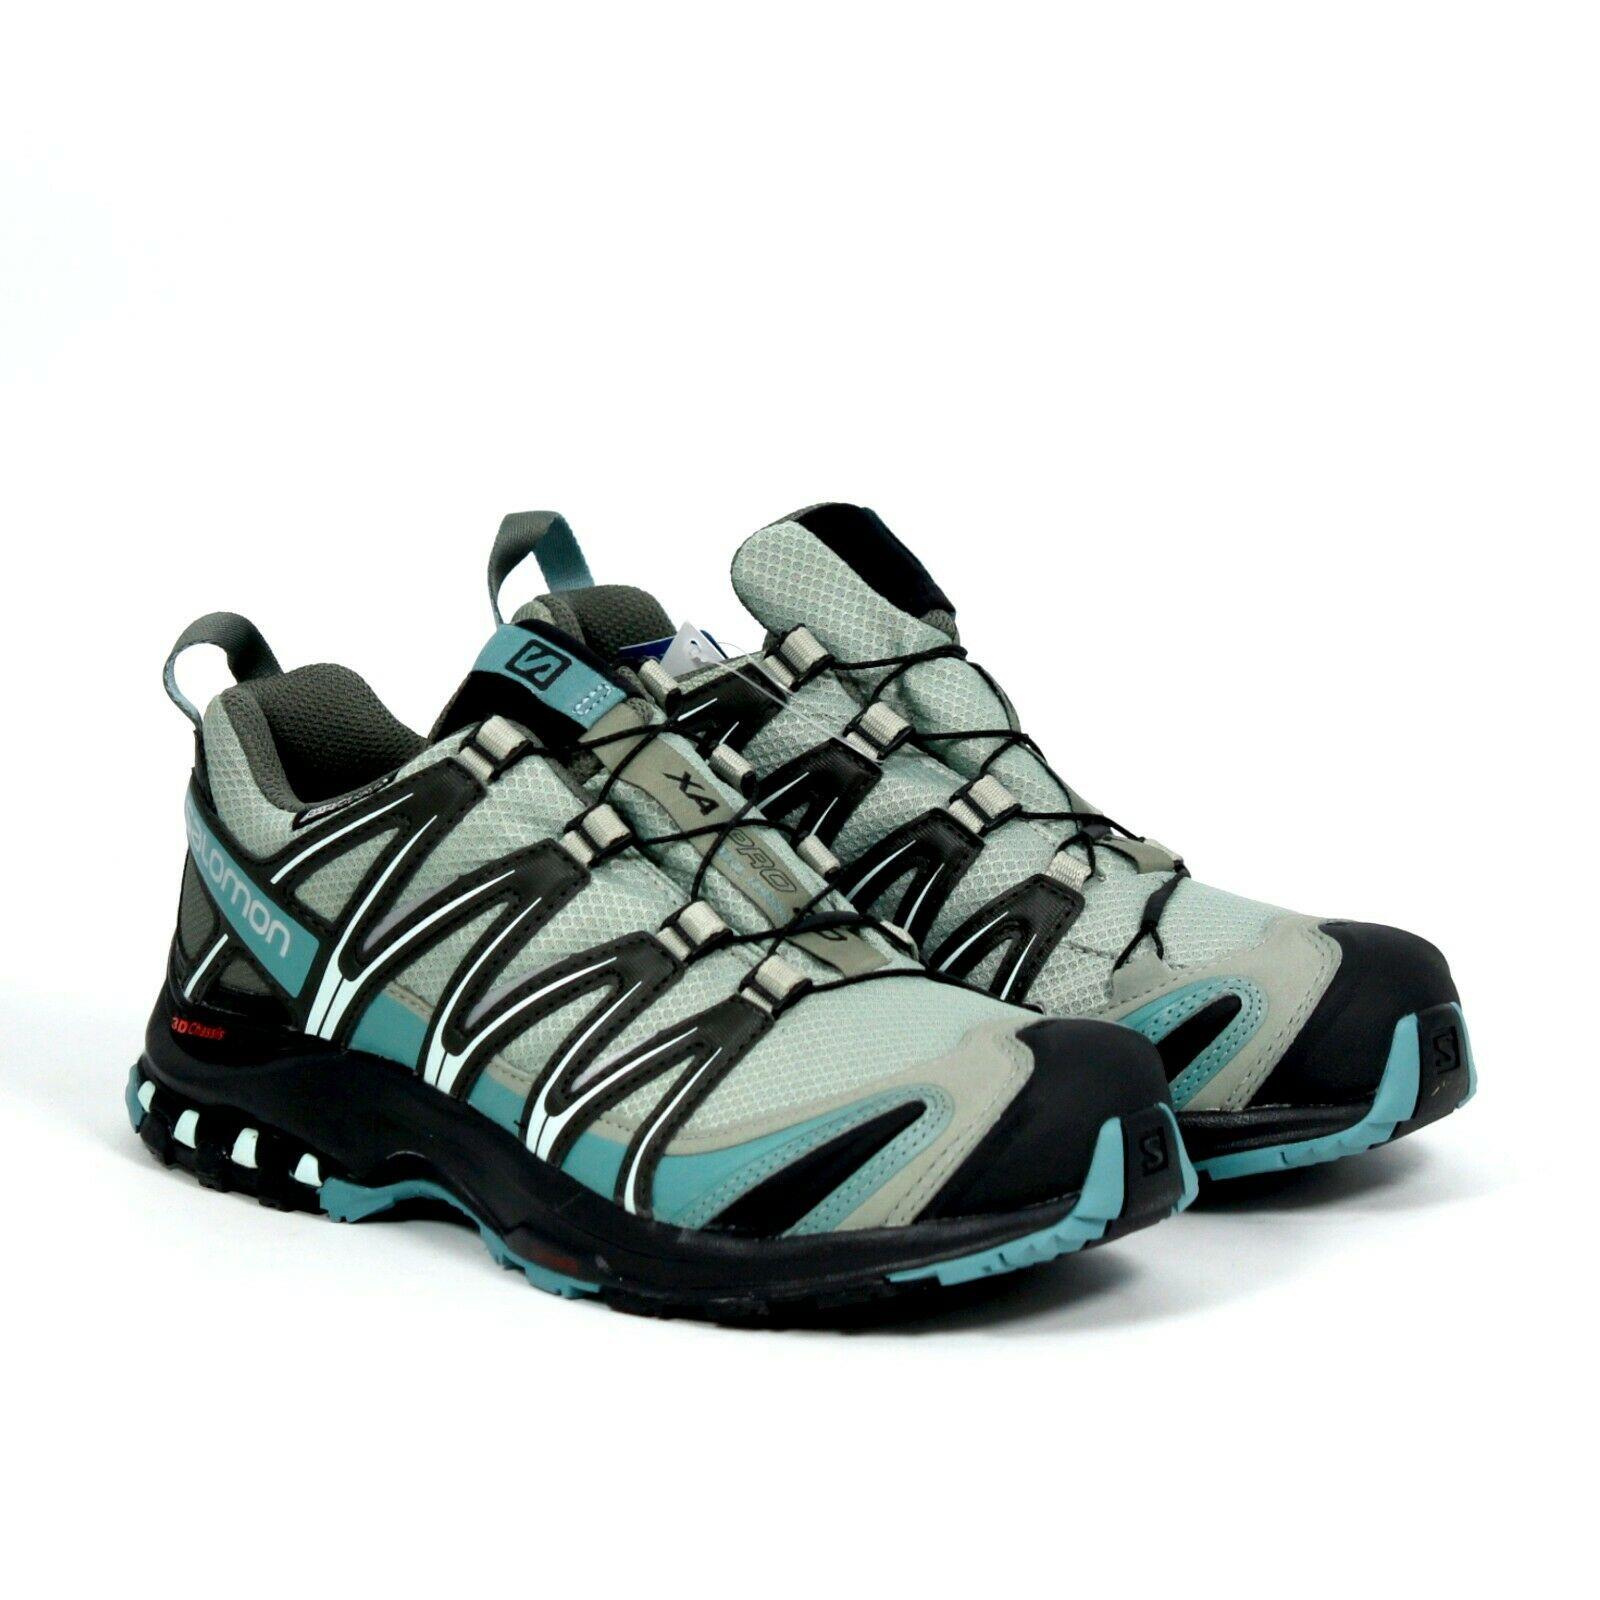 Salomon Womens XA Pro 3D Trail Running Low Top Shoes Shadow Artic Size 8